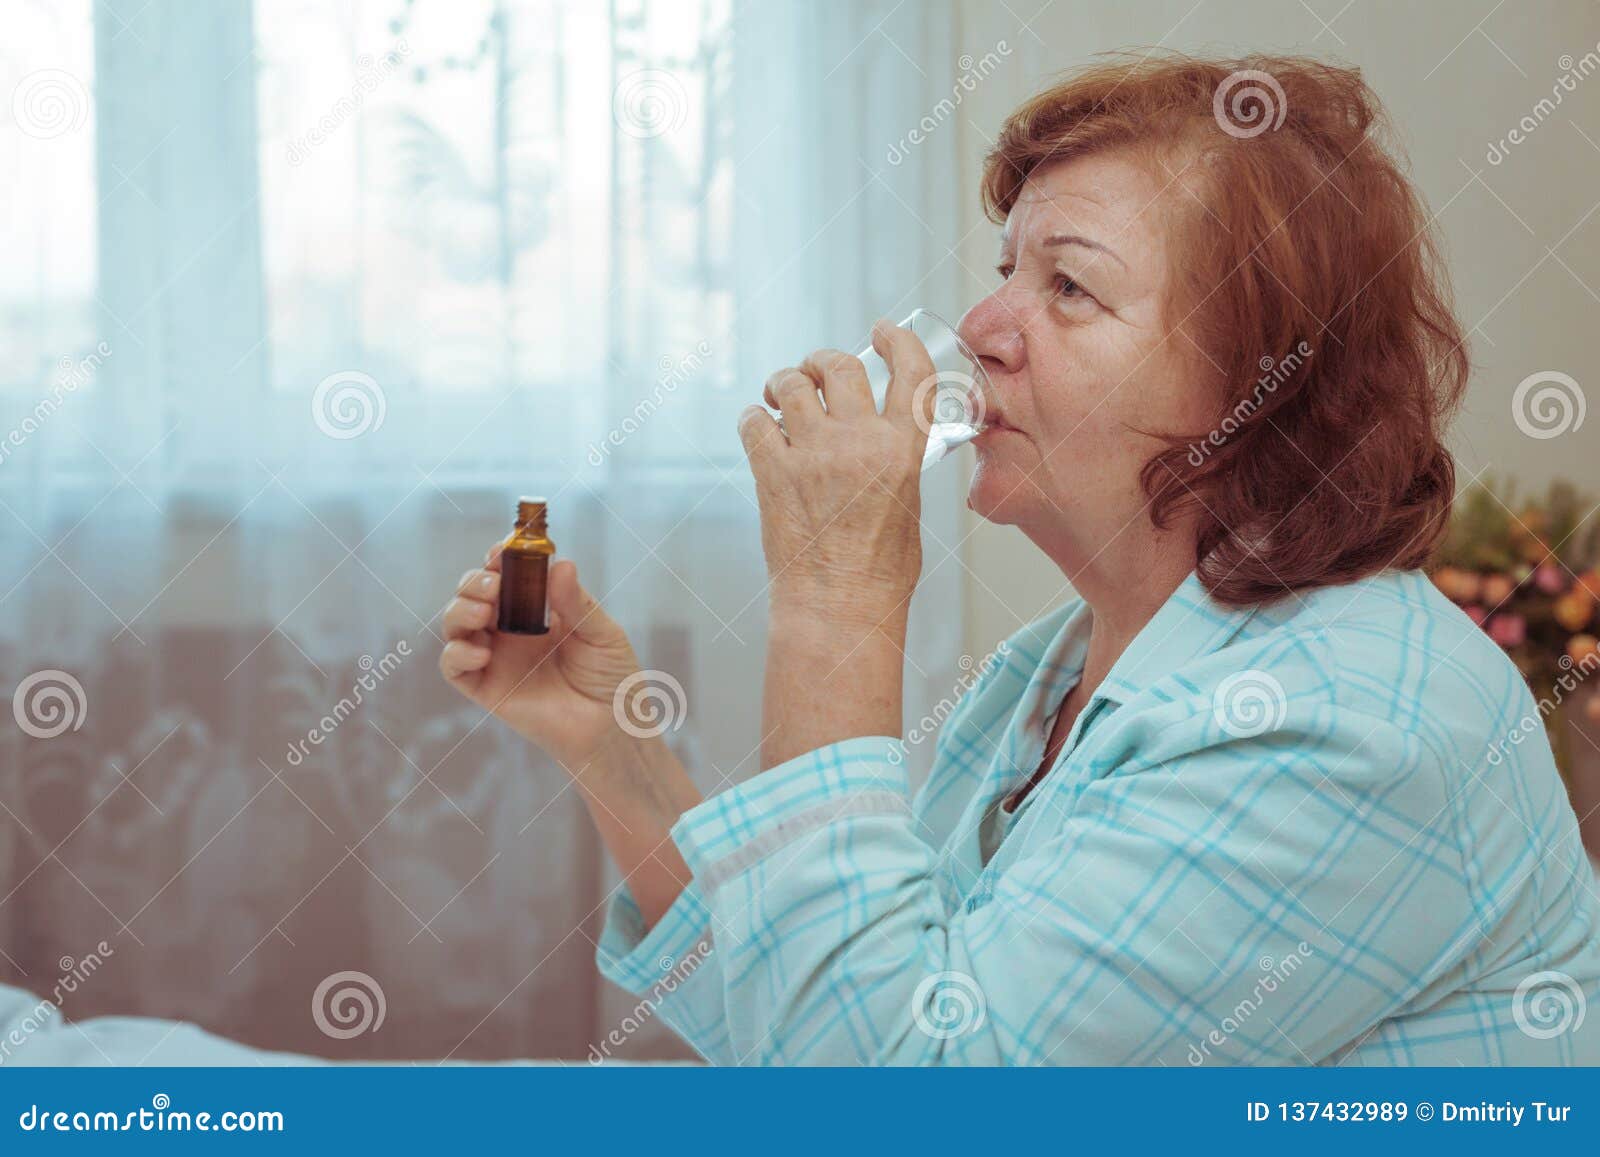 Песня тетя пьет. Старшая женщина пьет таблетки. Пенсионер пьет таблетки. Пожилой пьет лекарство. Бабушка пьет таблетки.